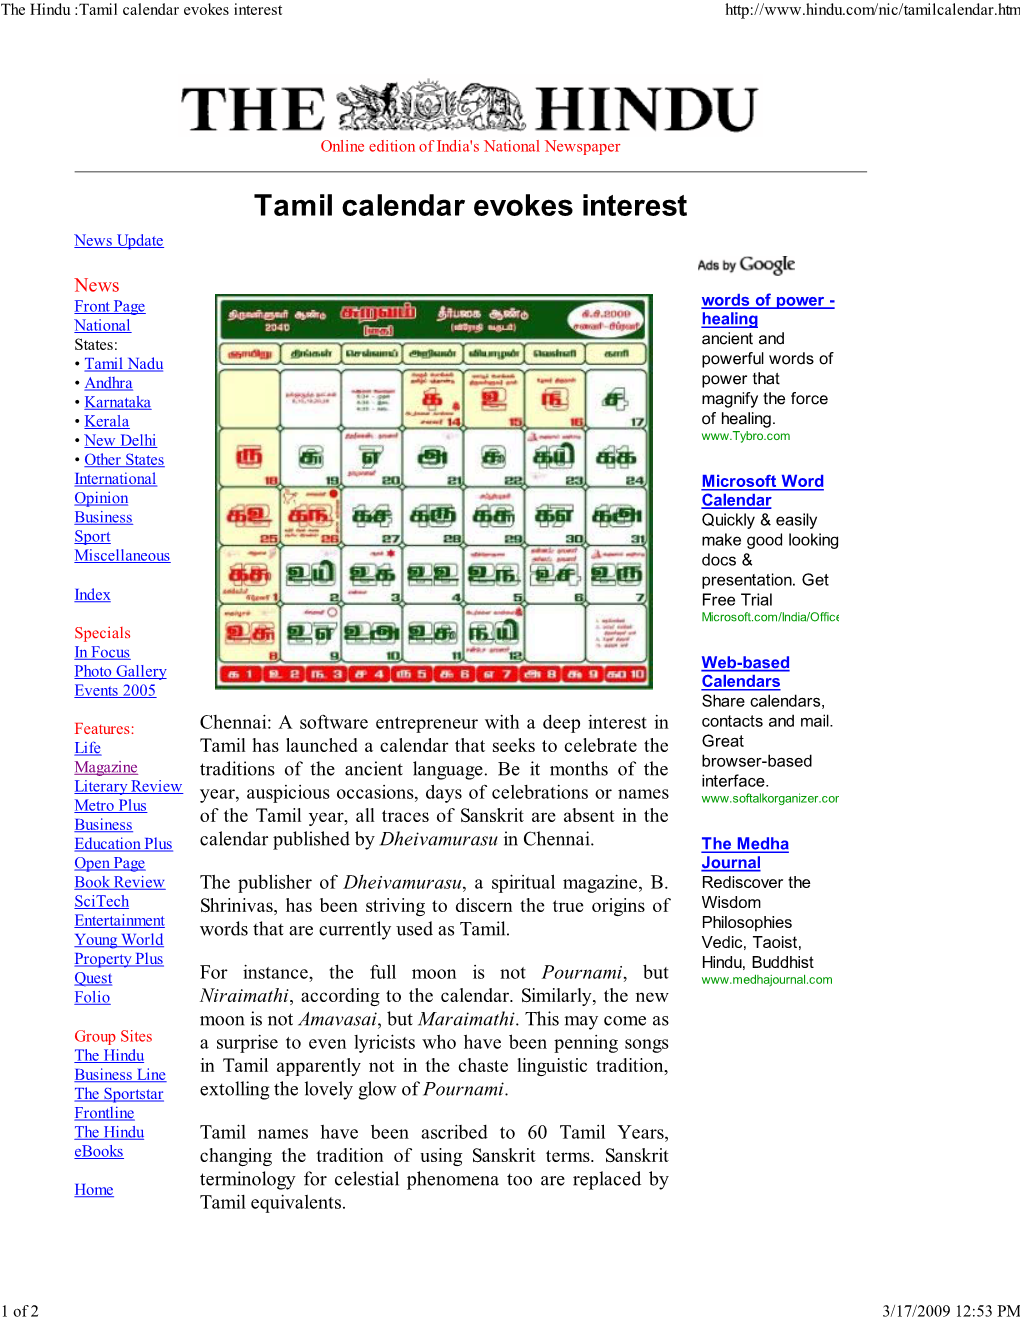 The Hindu :Tamil Calendar E